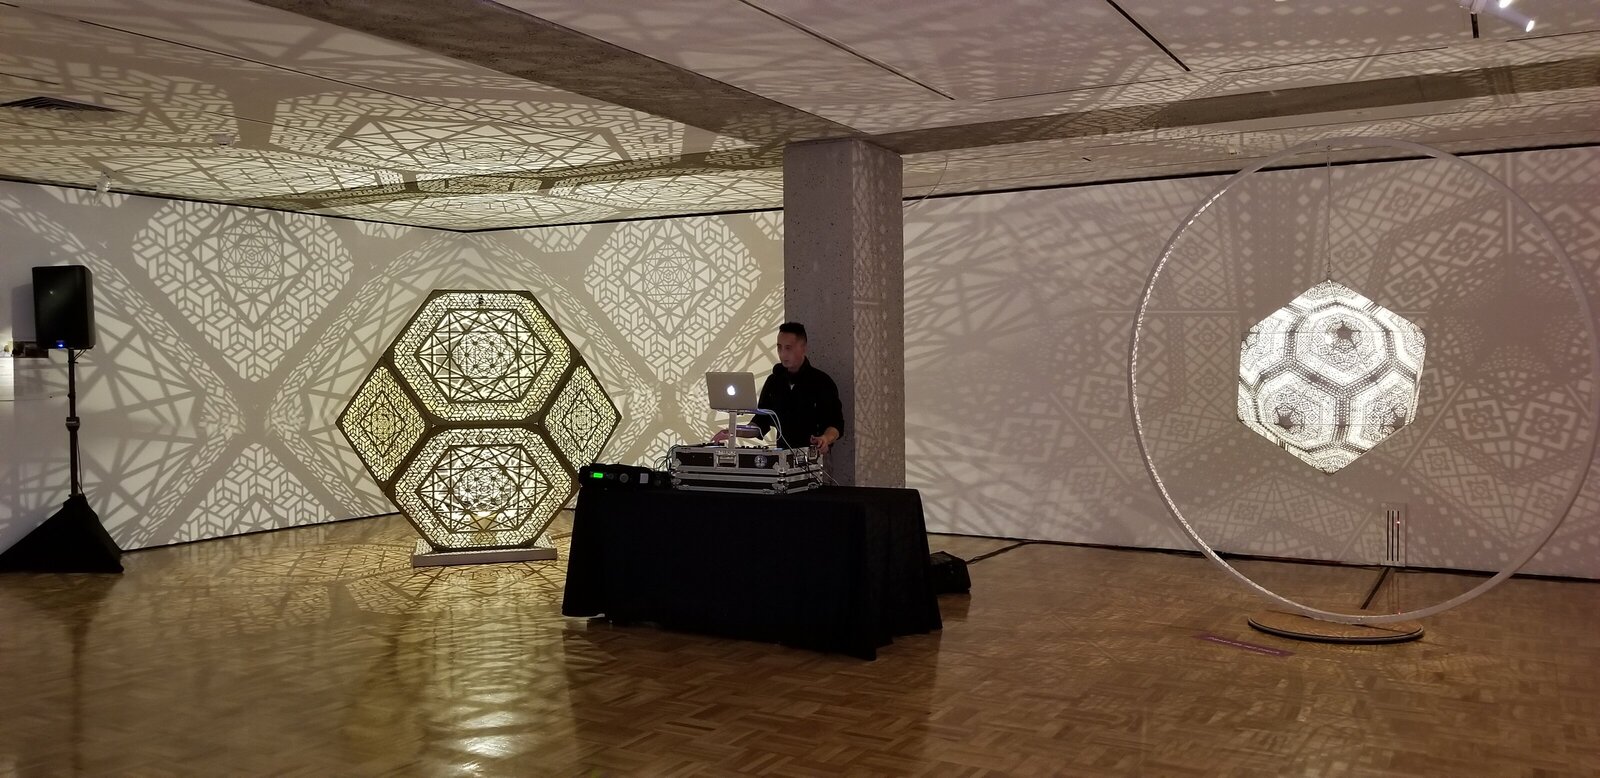 DJ Set Up 2 (Oakland Museum)